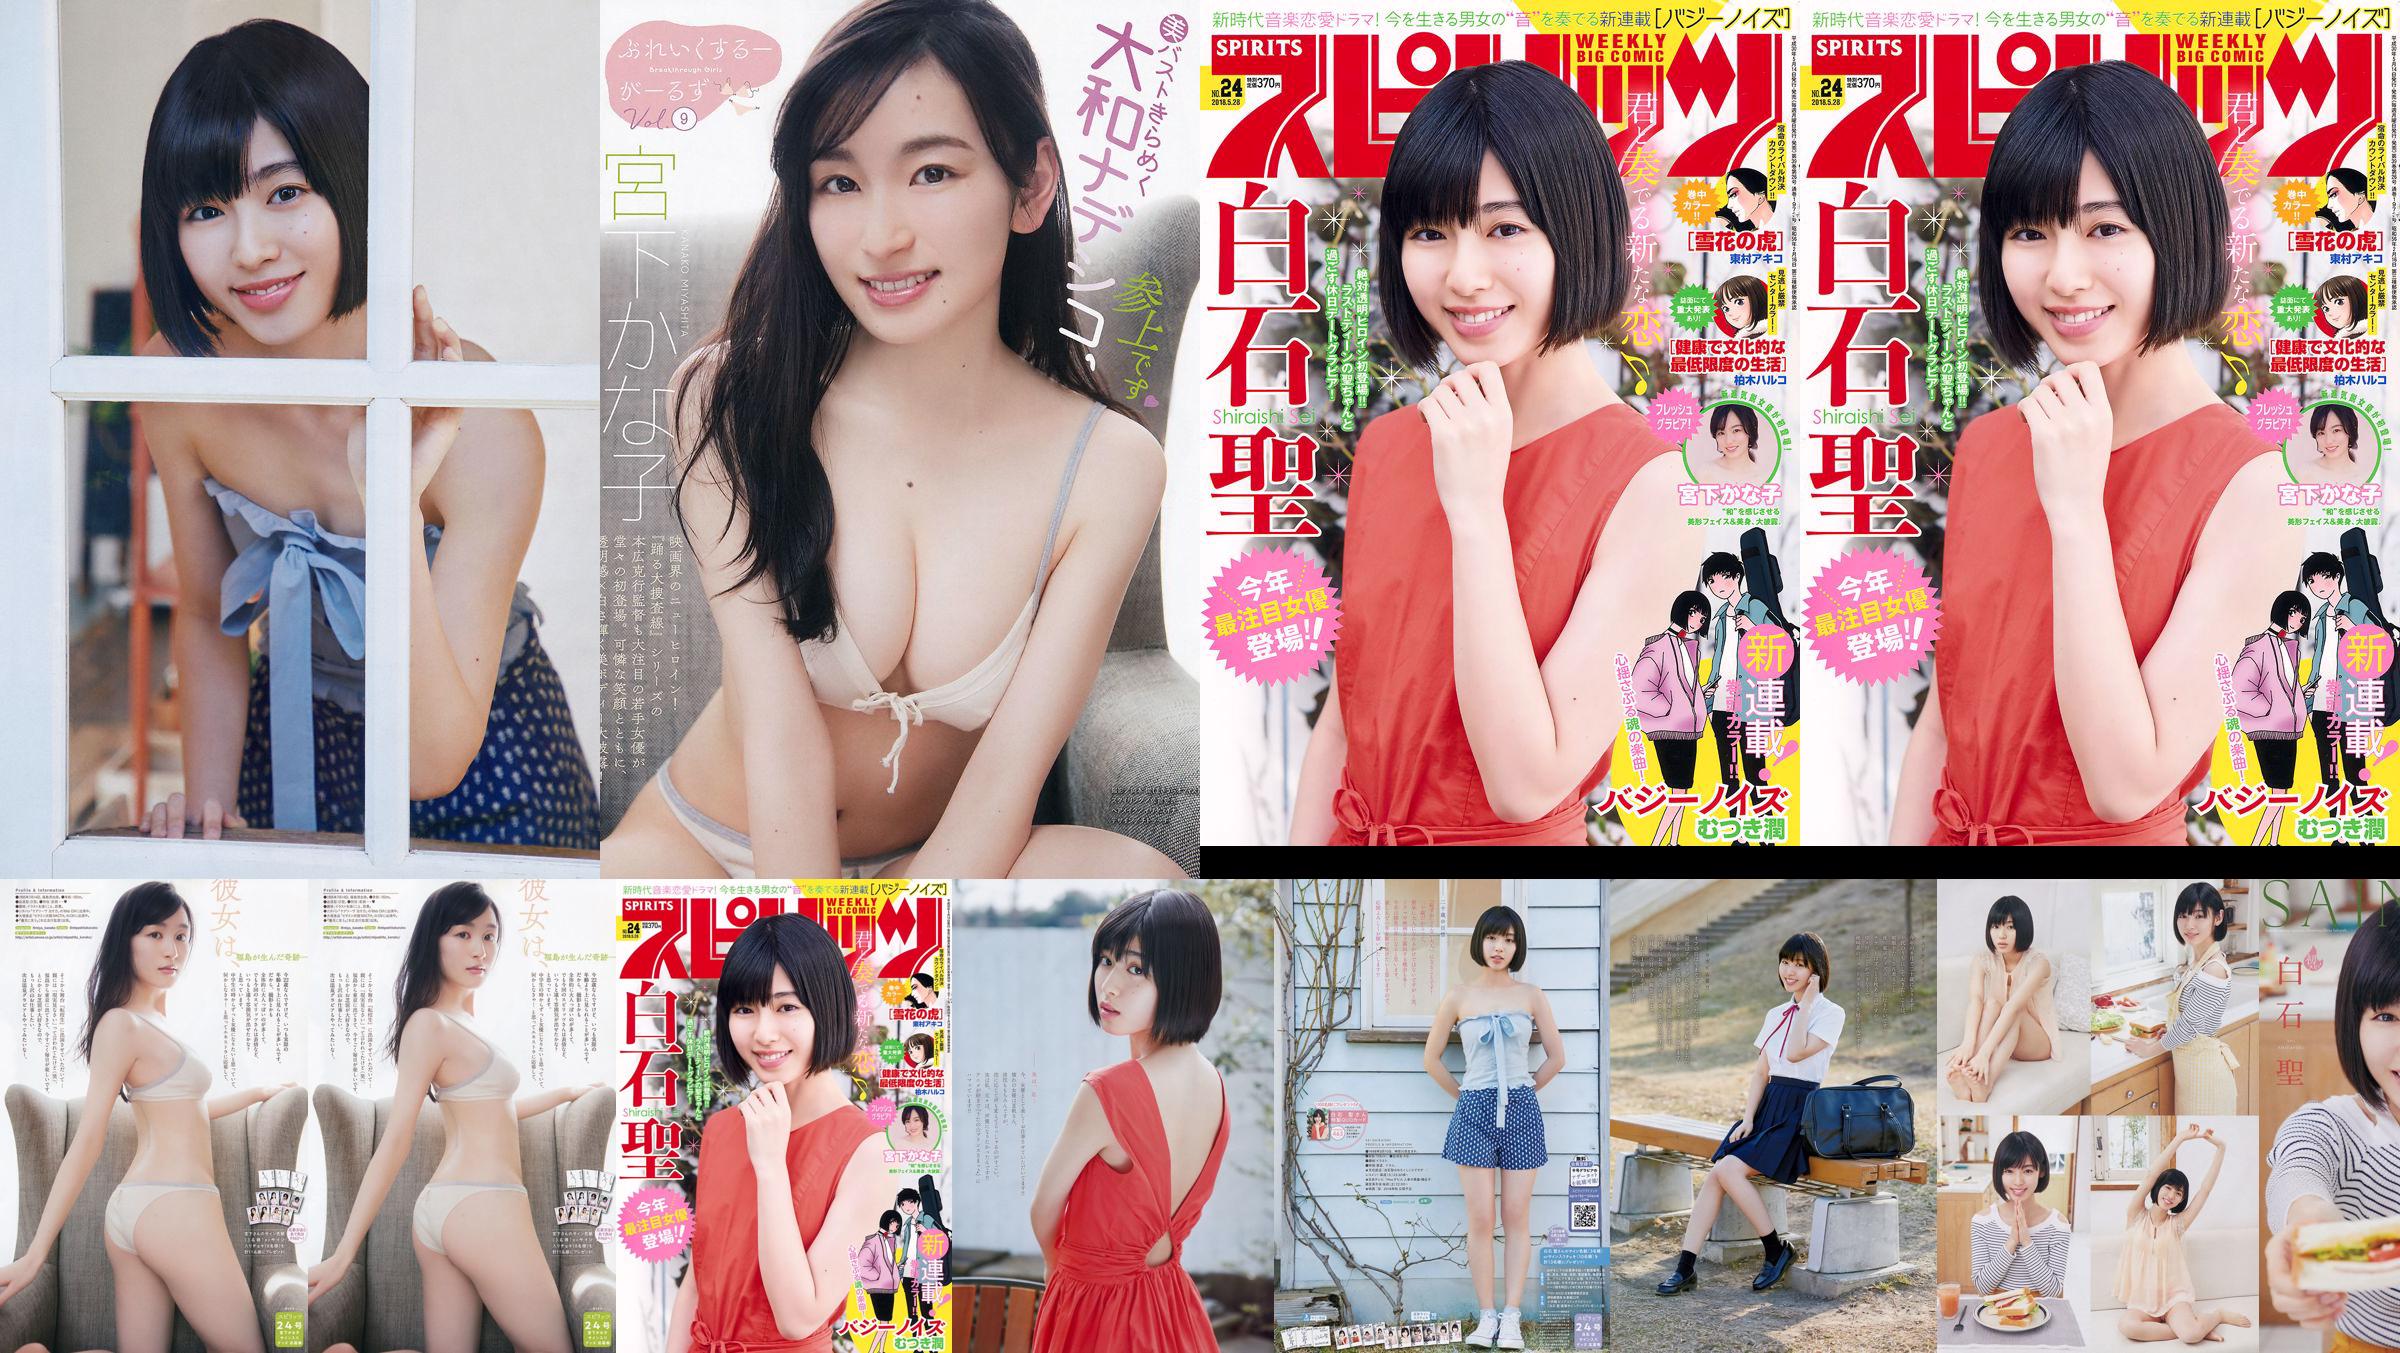 Yuria Kizaki Nana Okada AKB48 Under Girls [Saut hebdomadaire des jeunes] 2015 No.36-37 Photographie No.952bc9 Page 1